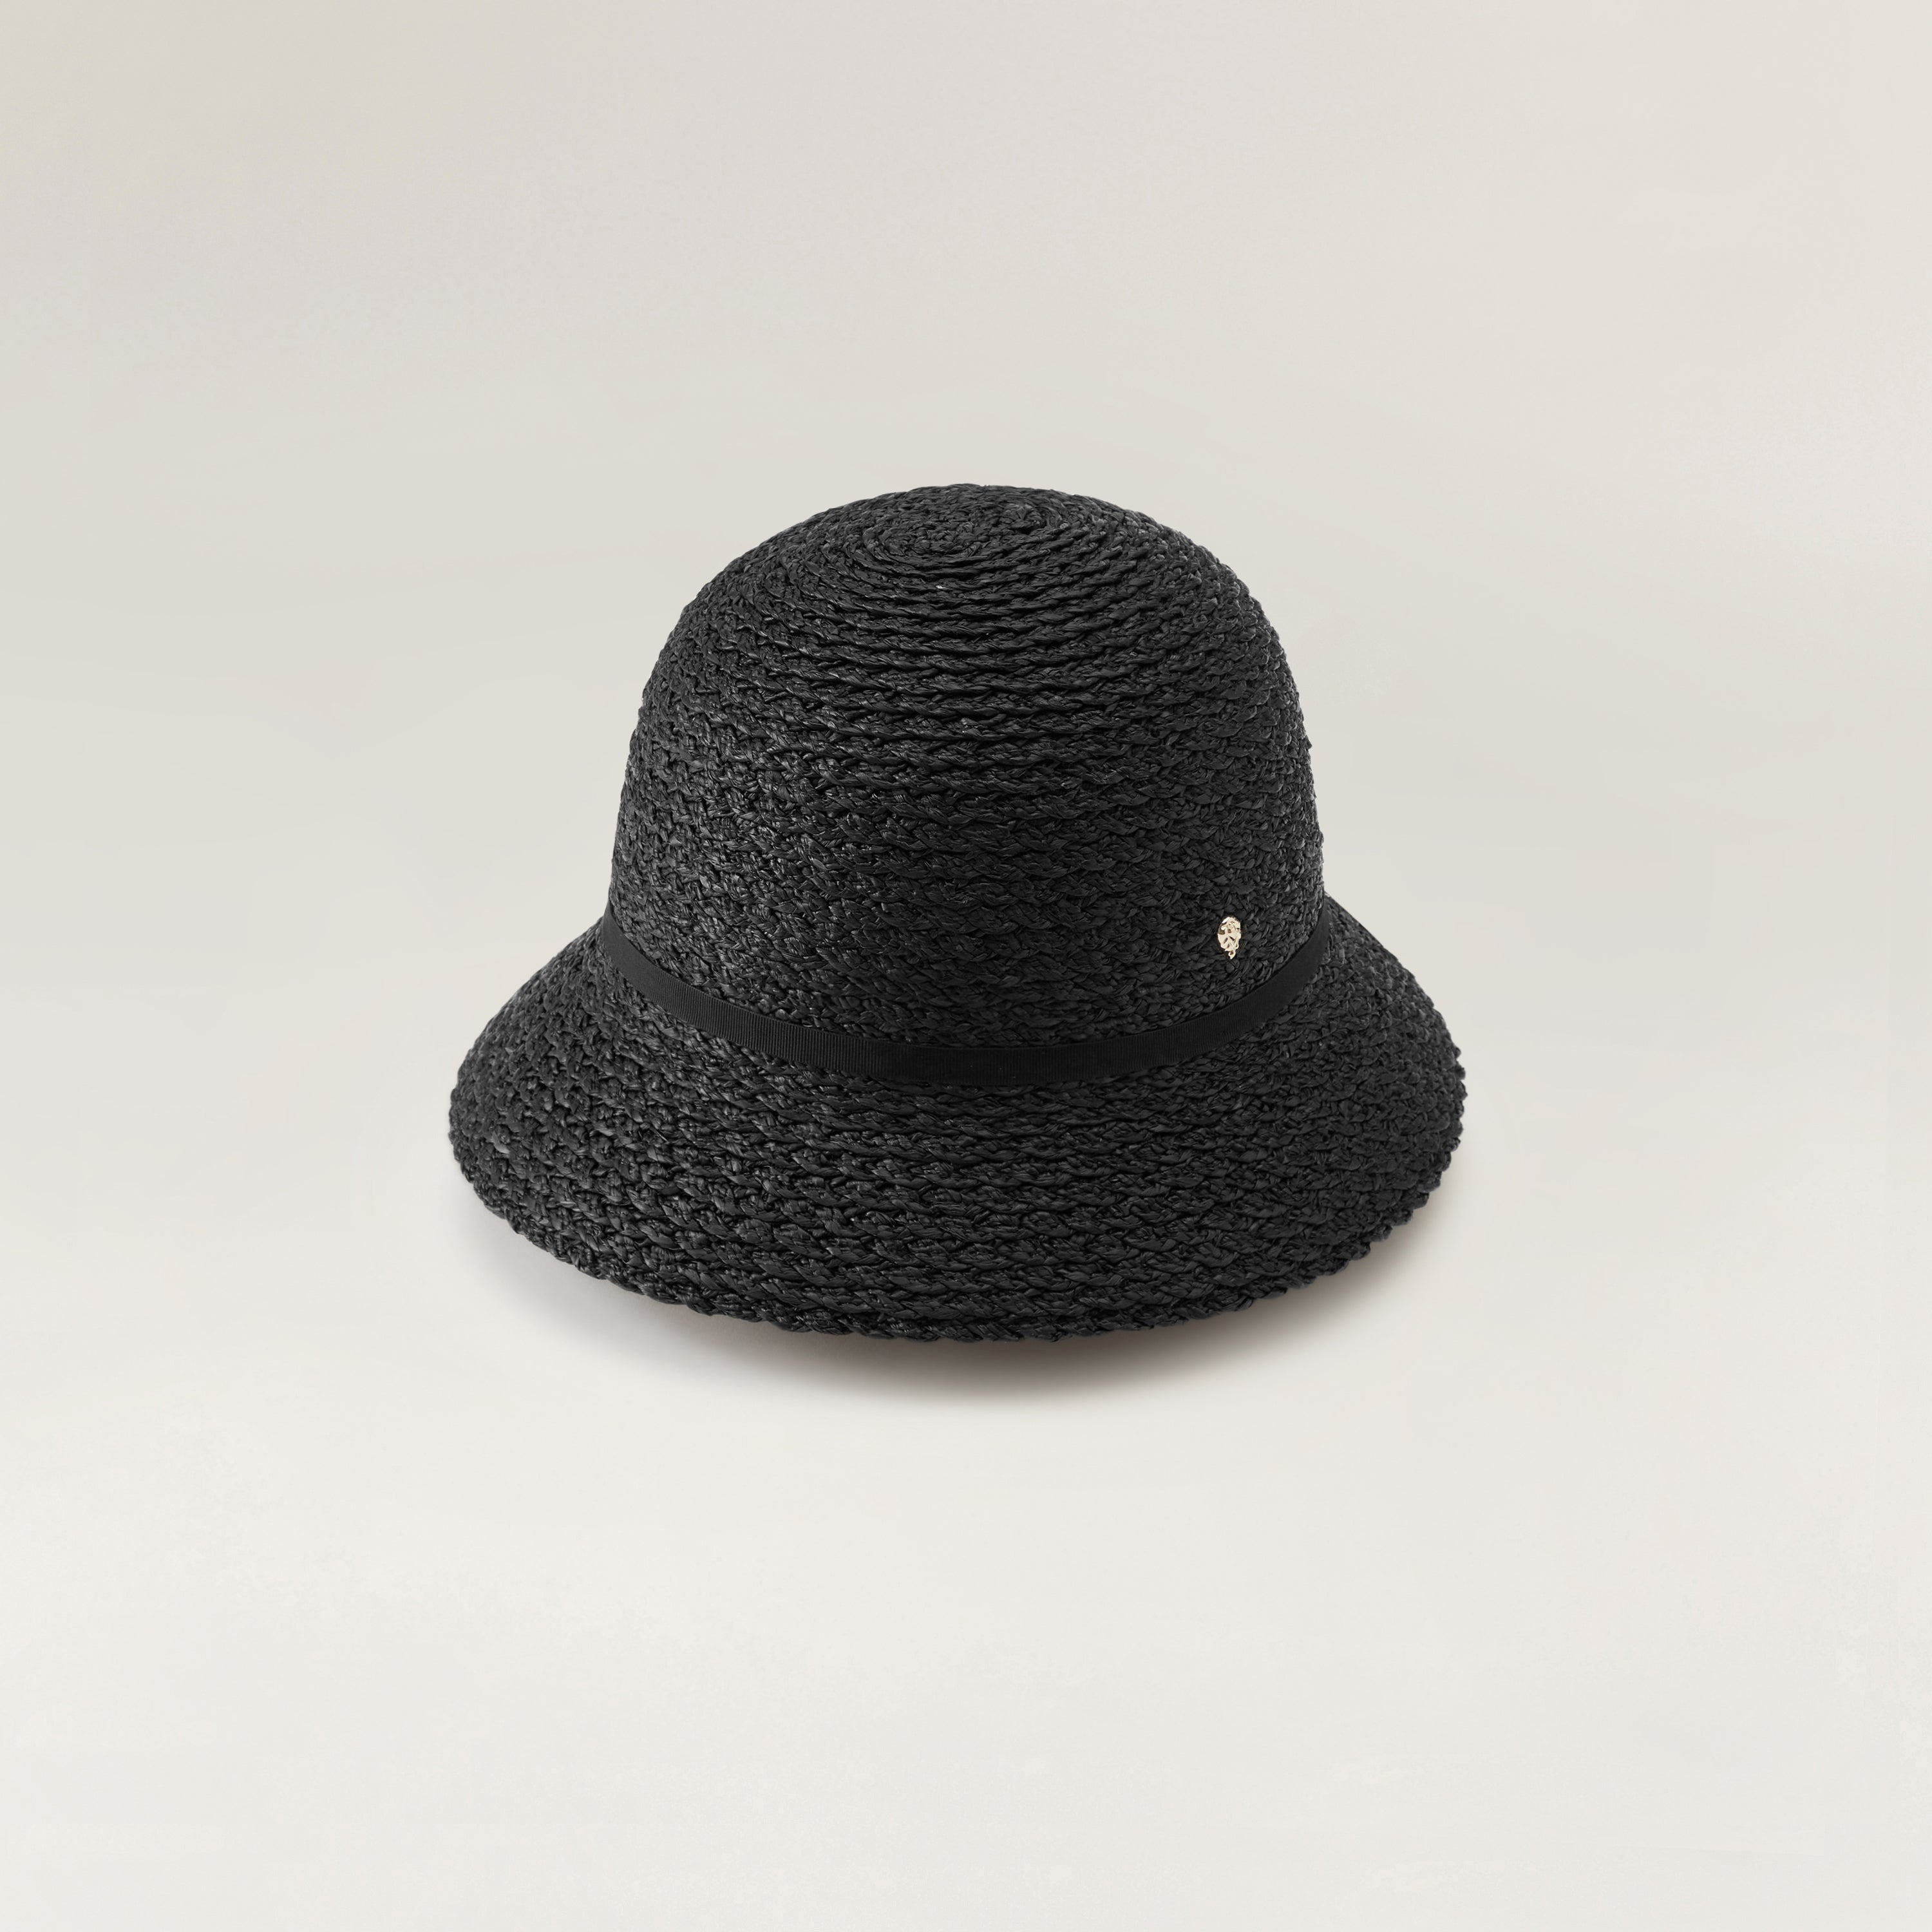 Helen Kaminski USA Official Store | Hats, Bags & Footwear